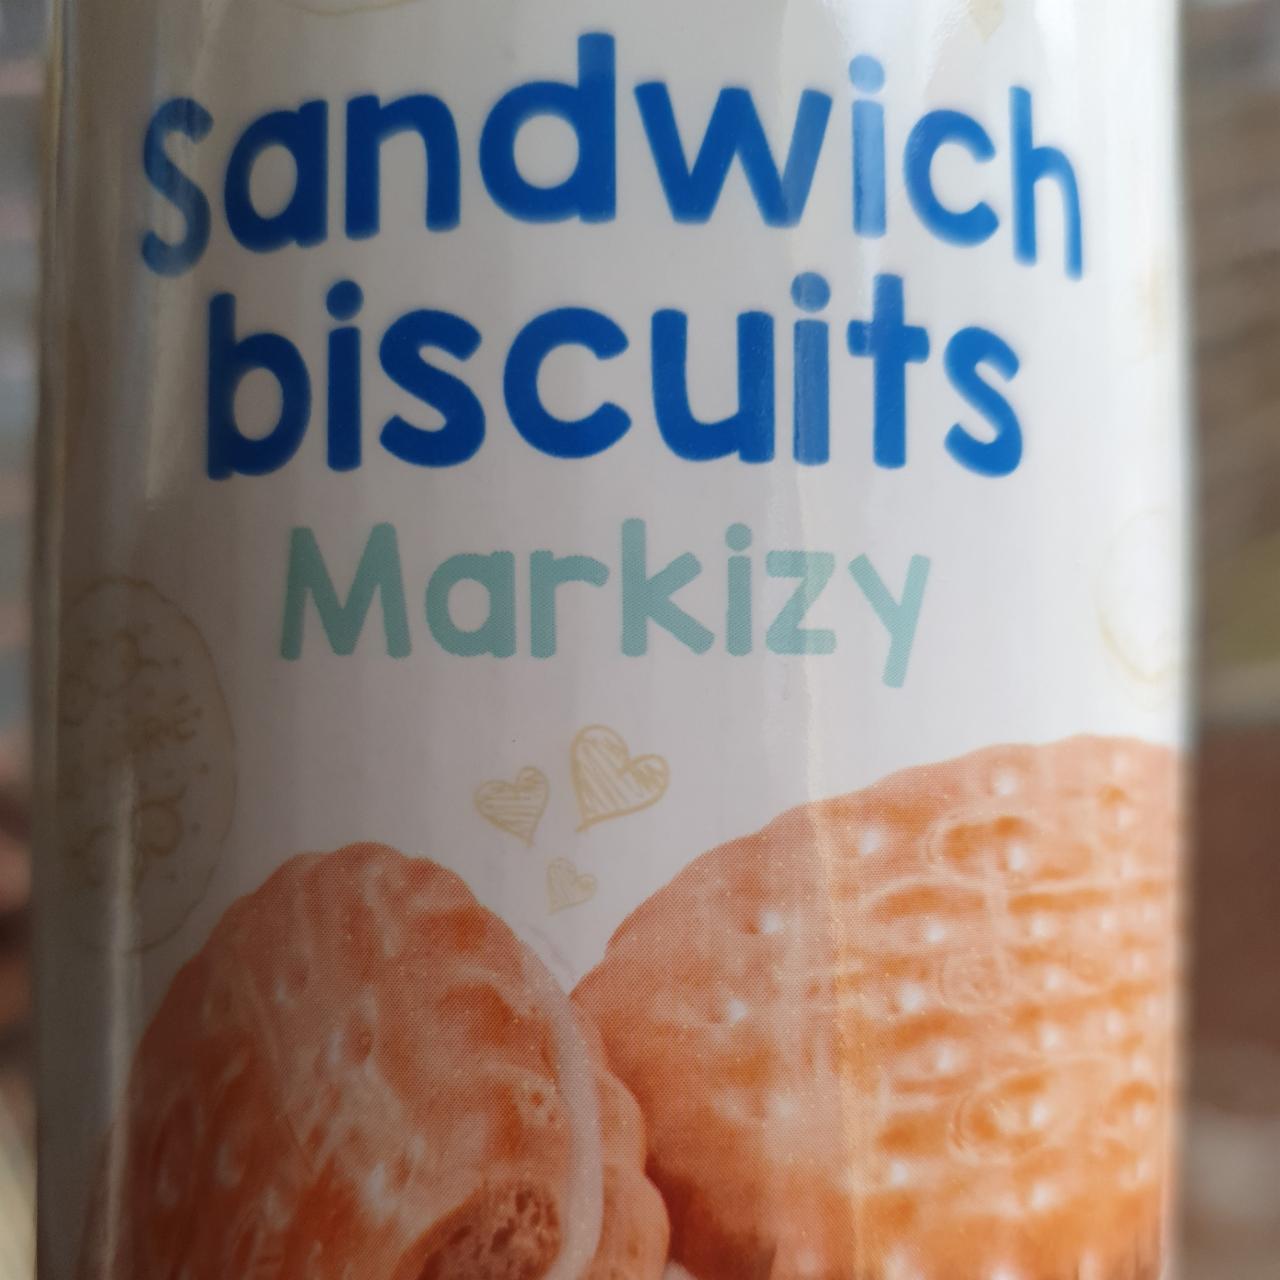 Fotografie - Sandwich biscuits markizy Delisana